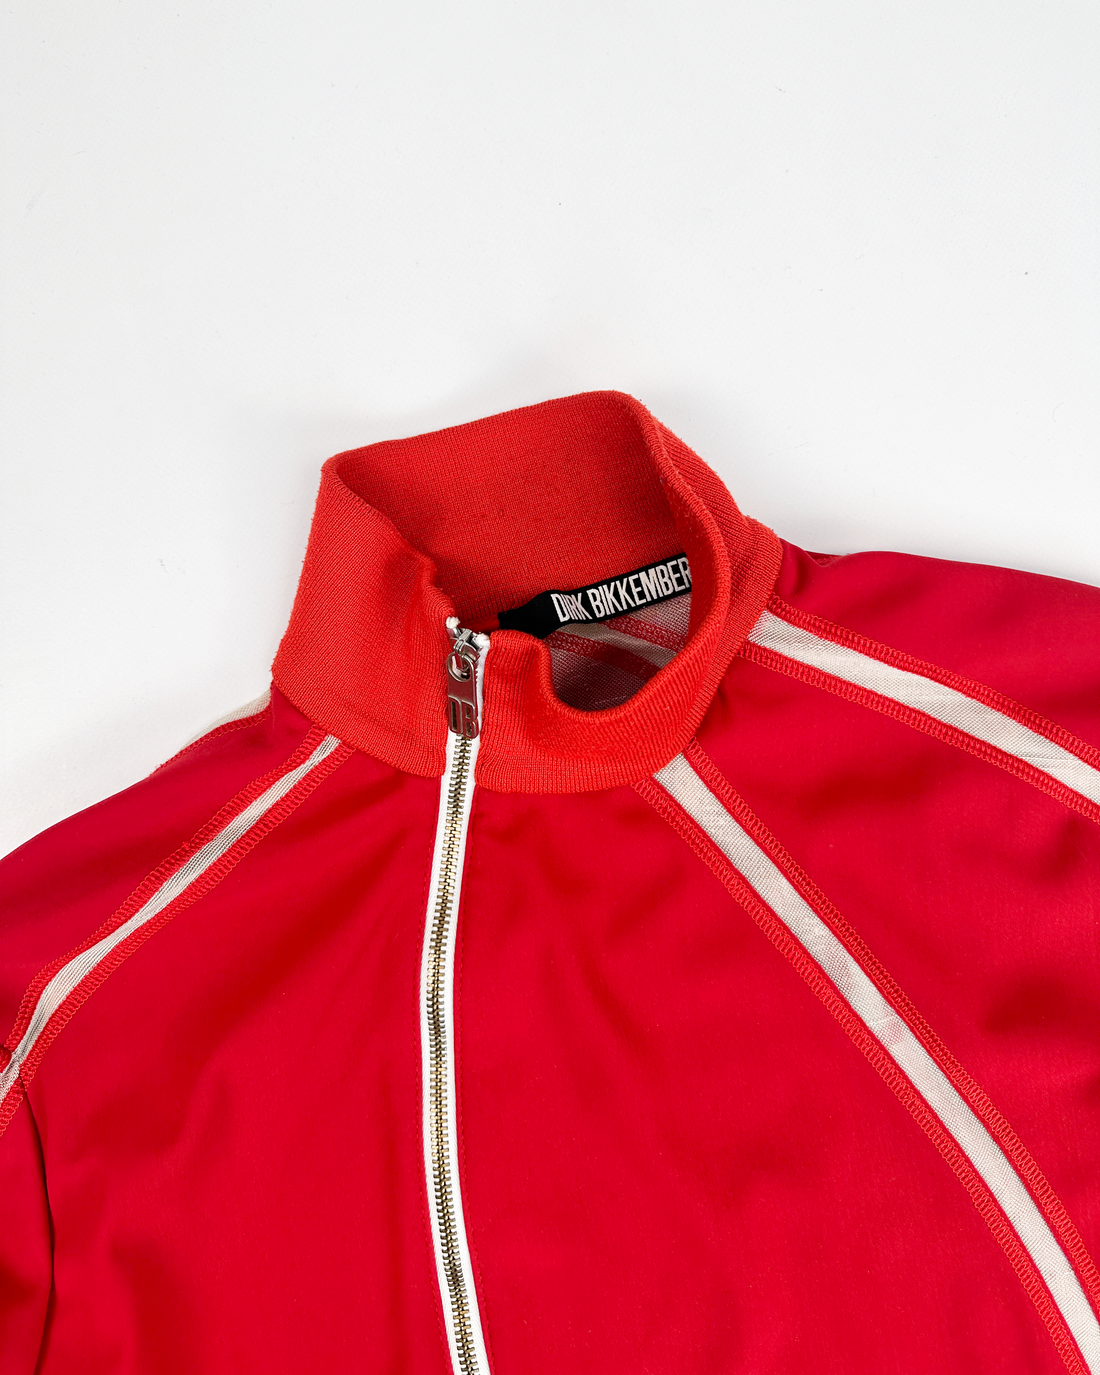 Dirk Bikkembergs Red Curved Zip Jacket 2000's